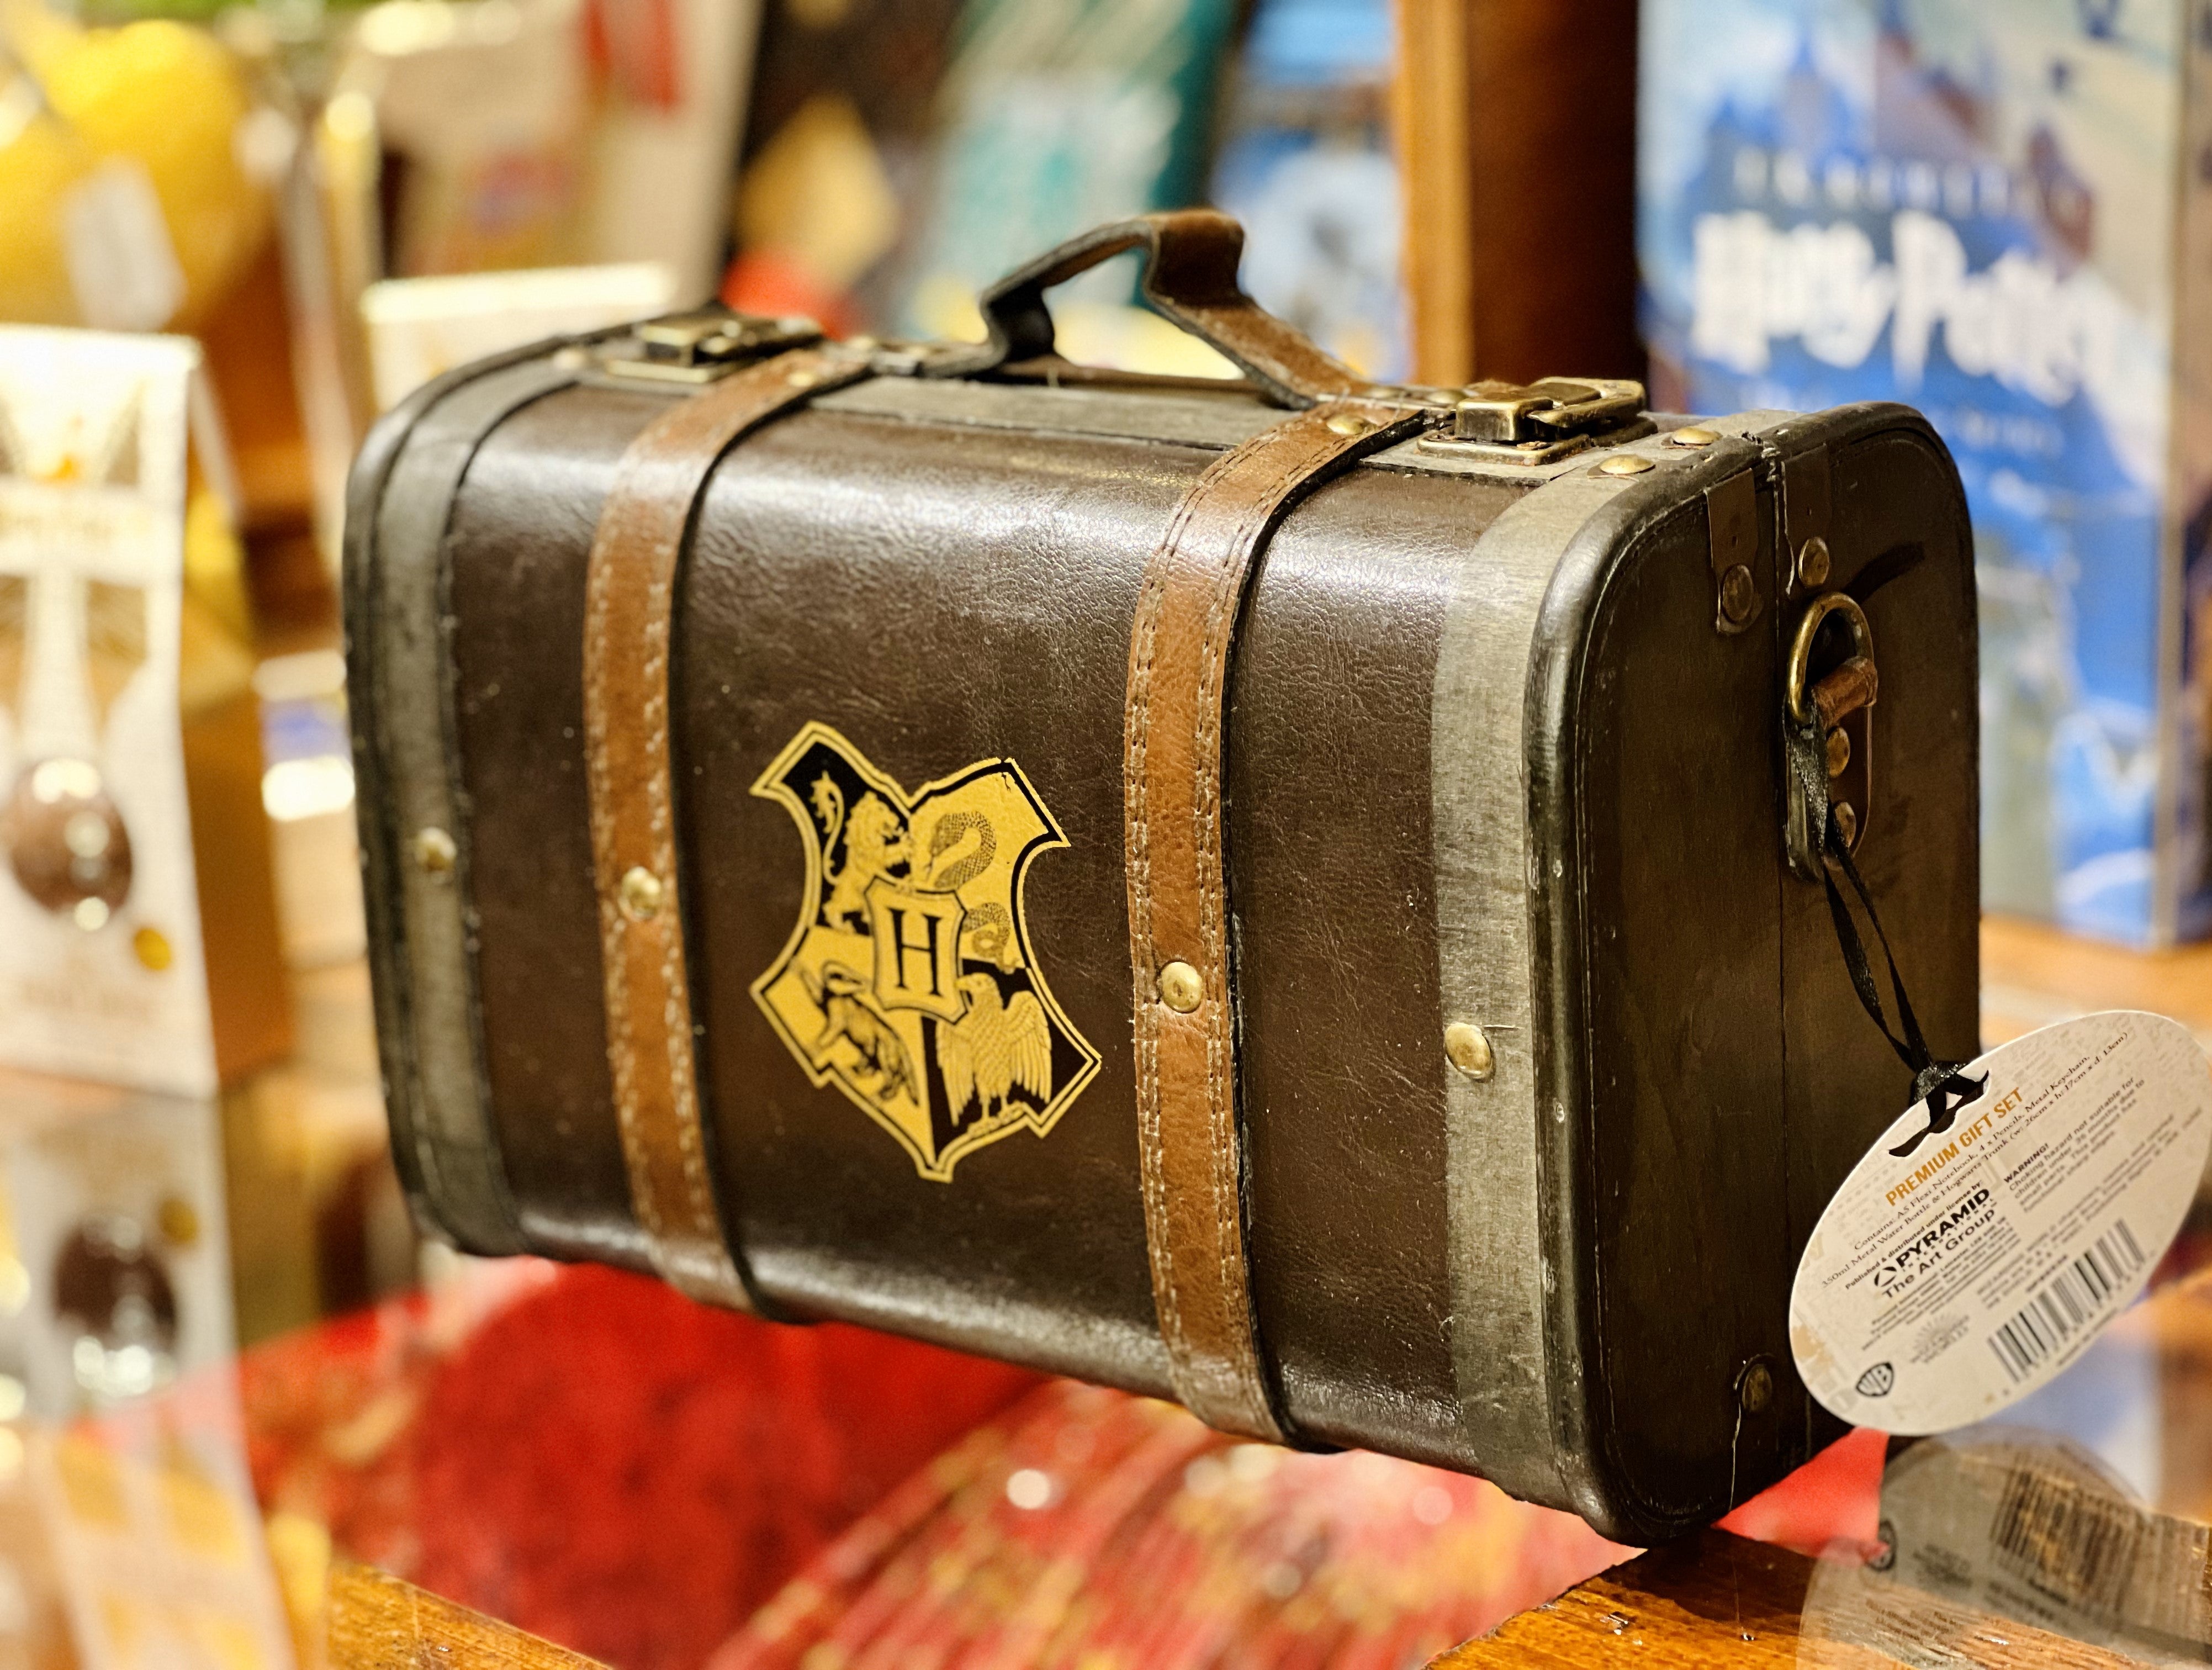 Hogwarts freshman set in a wooden suitcase